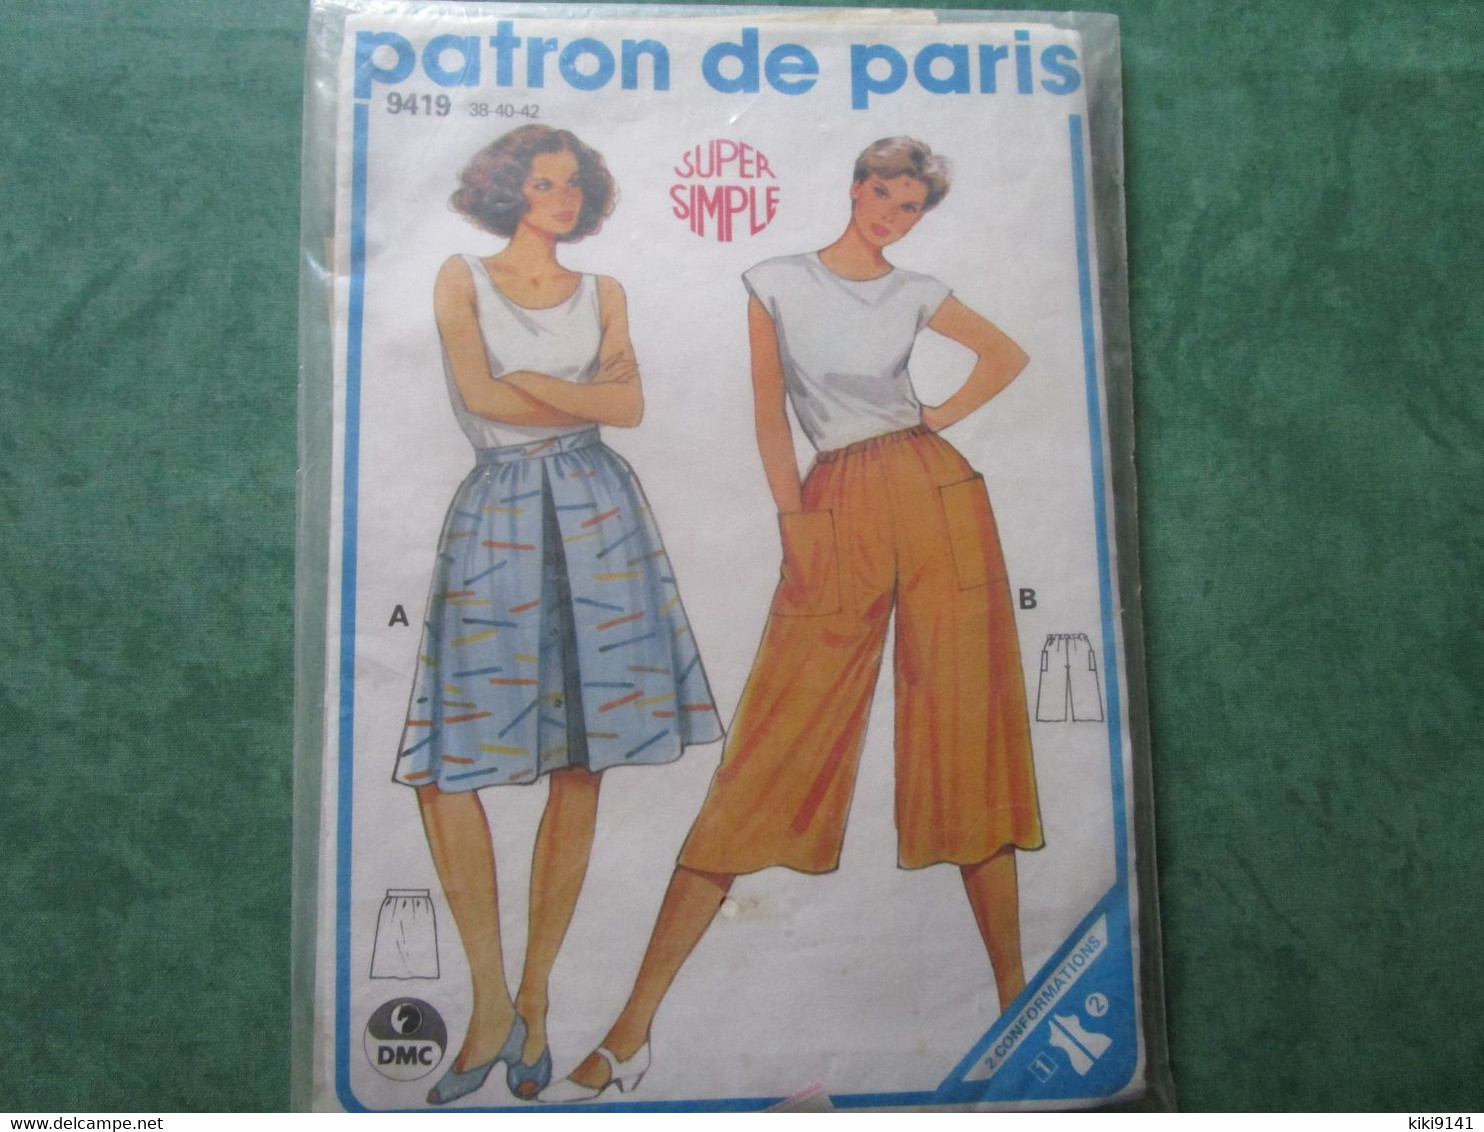 PATRON DE PARIS 9419 - 38-40-42 - Super Simple - Patrones